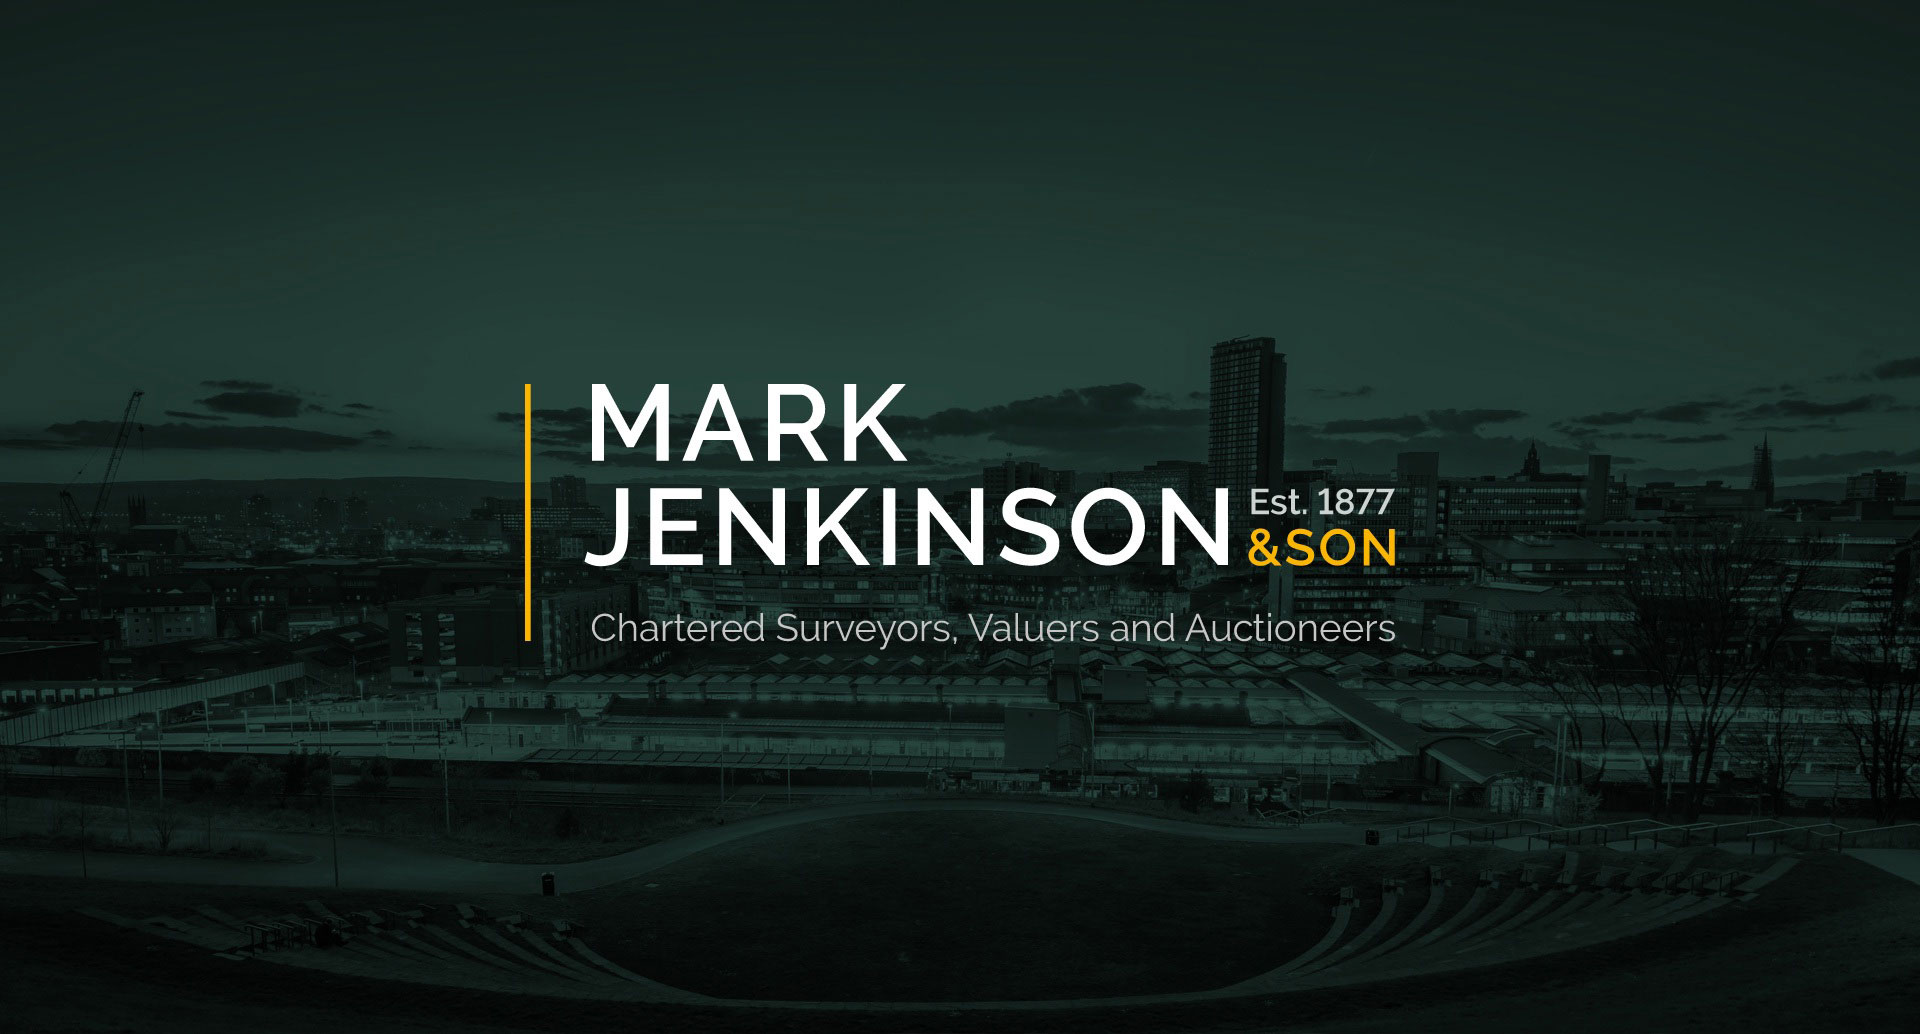 Mark Jenksinson project